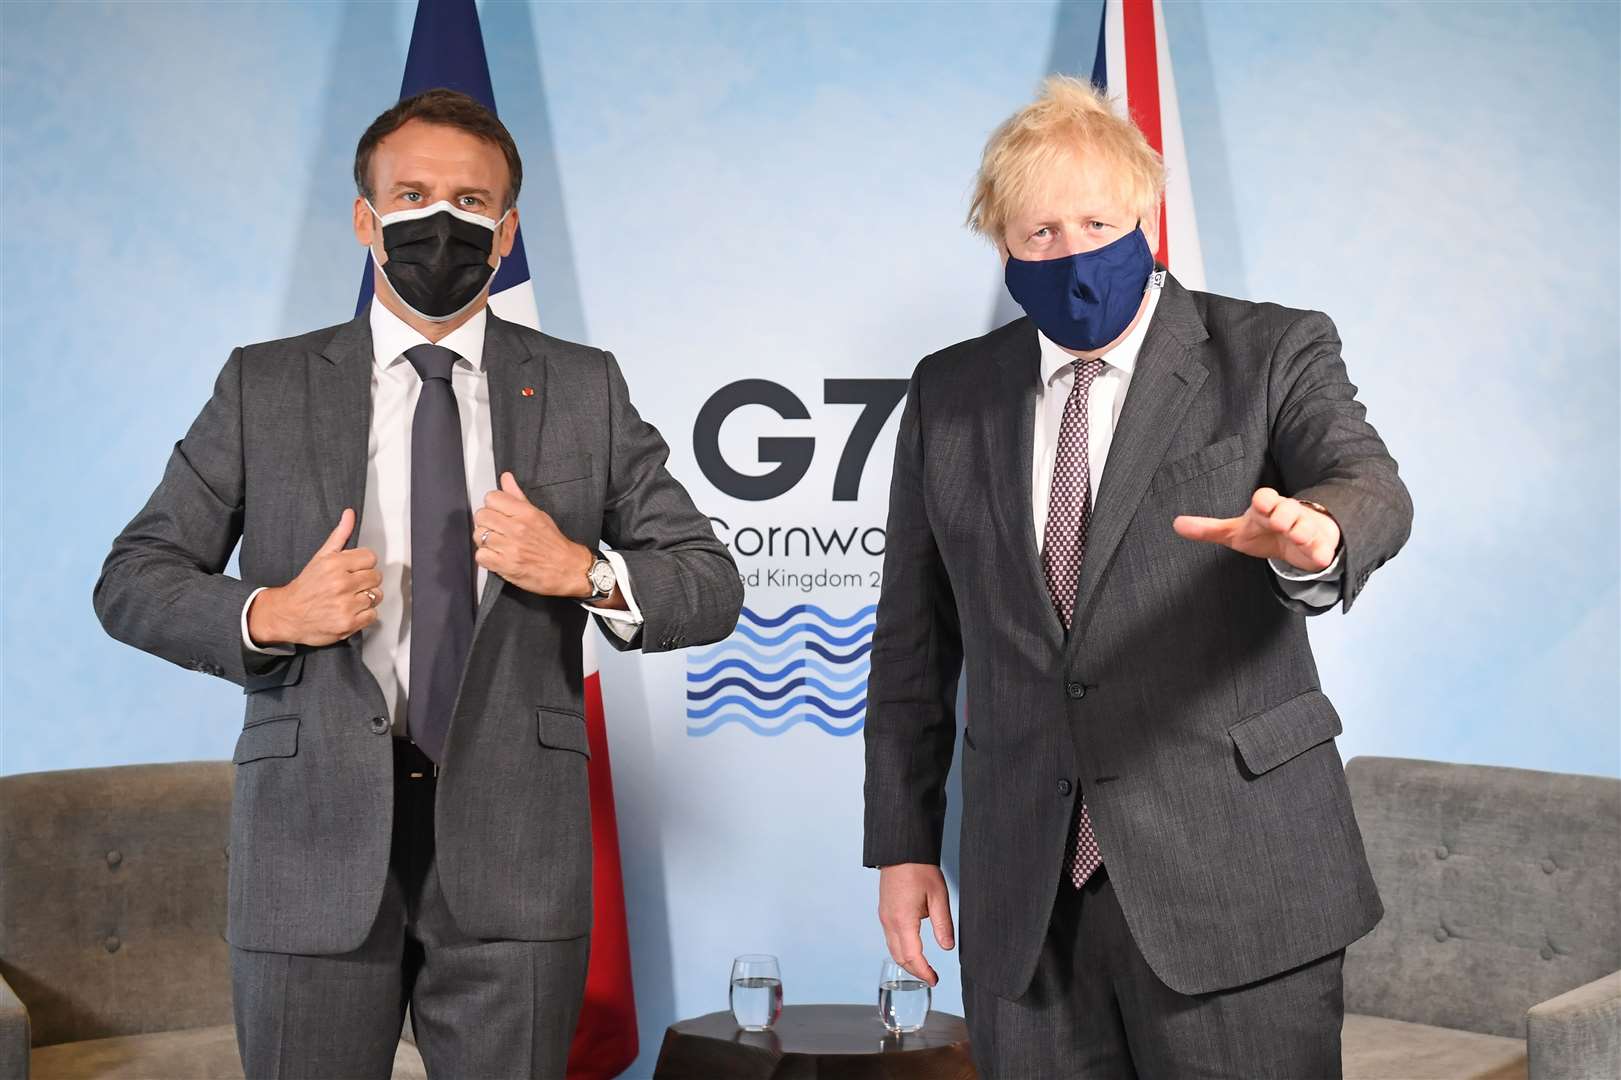 Boris Johnson and Emmanuel Macron held talks at the G7 summit (Stefan Rousseau/PA)